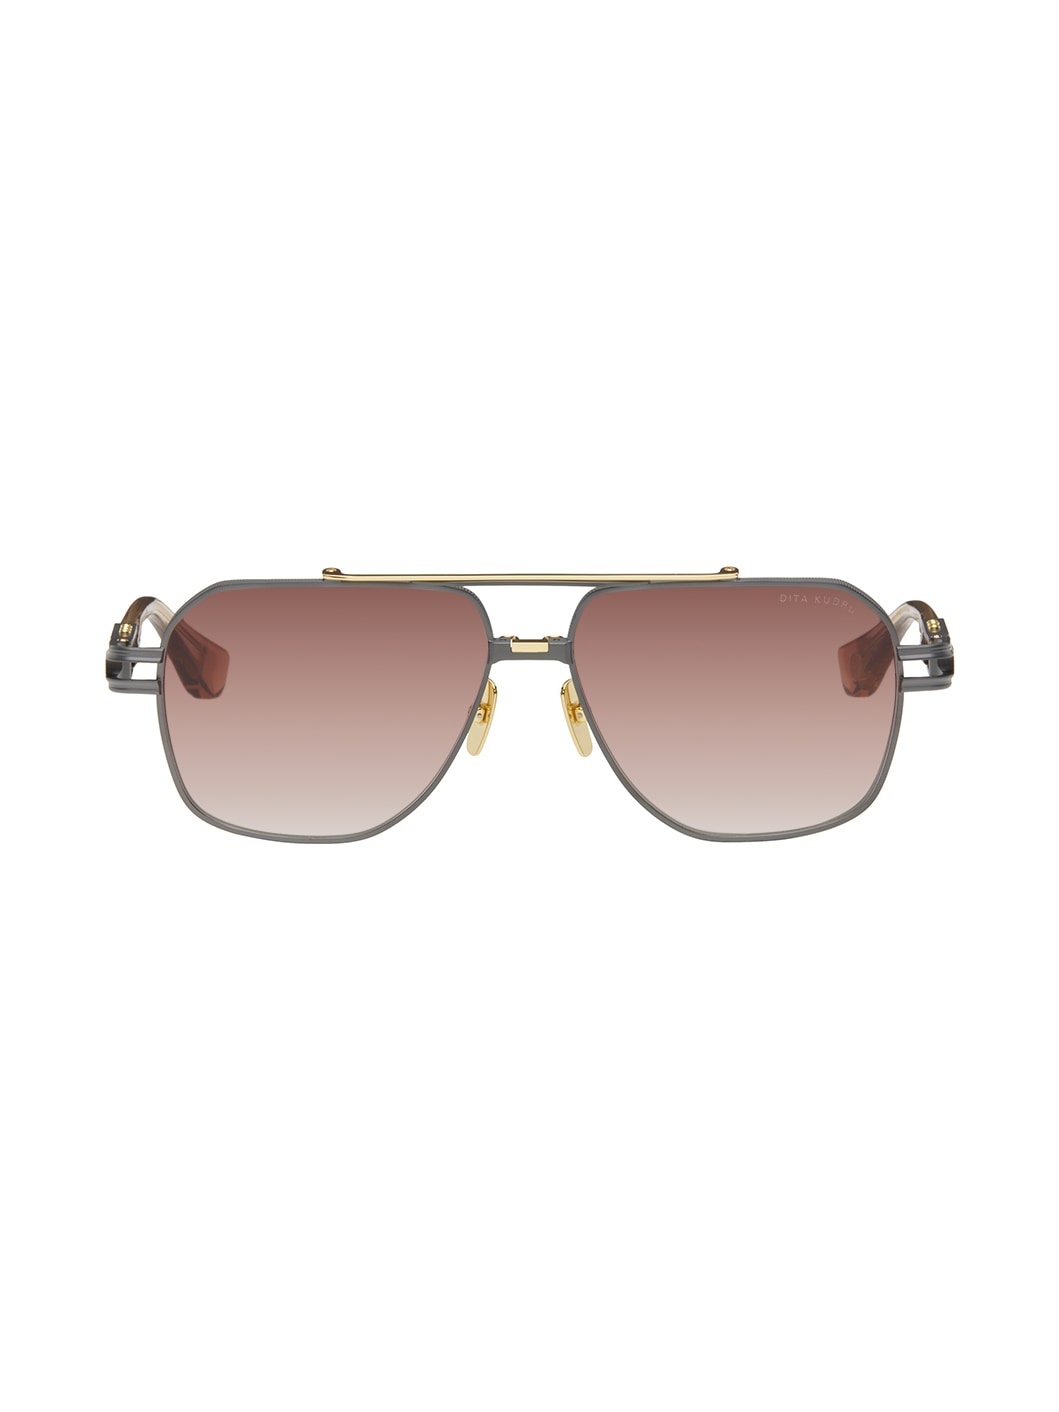 Gray & Gold Kudra Sunglasses - 1